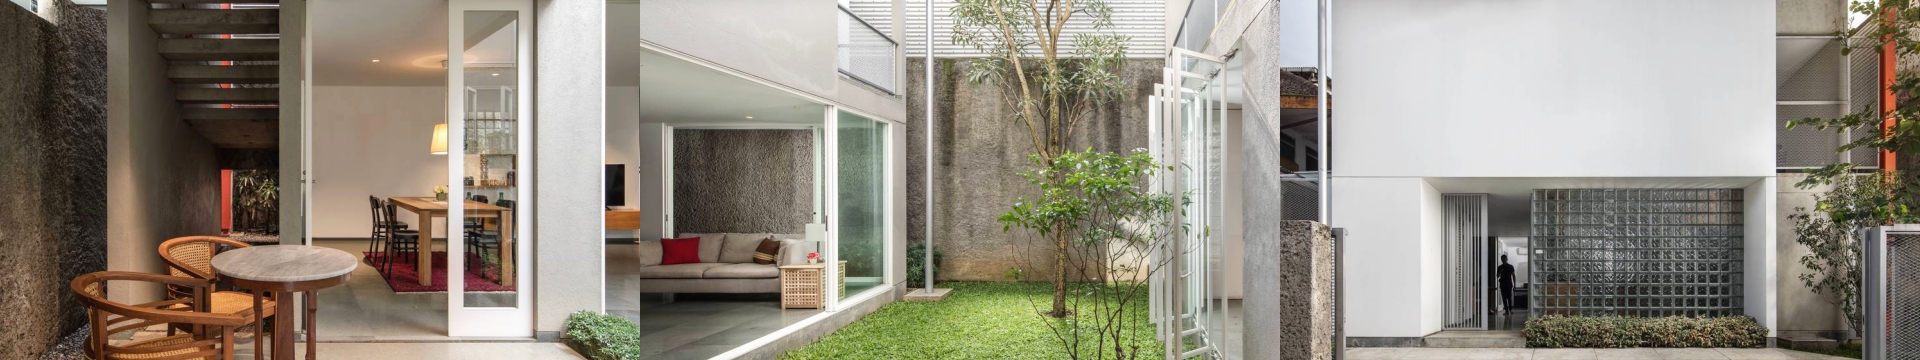 Doctor House, Tan Tik Lam Architects